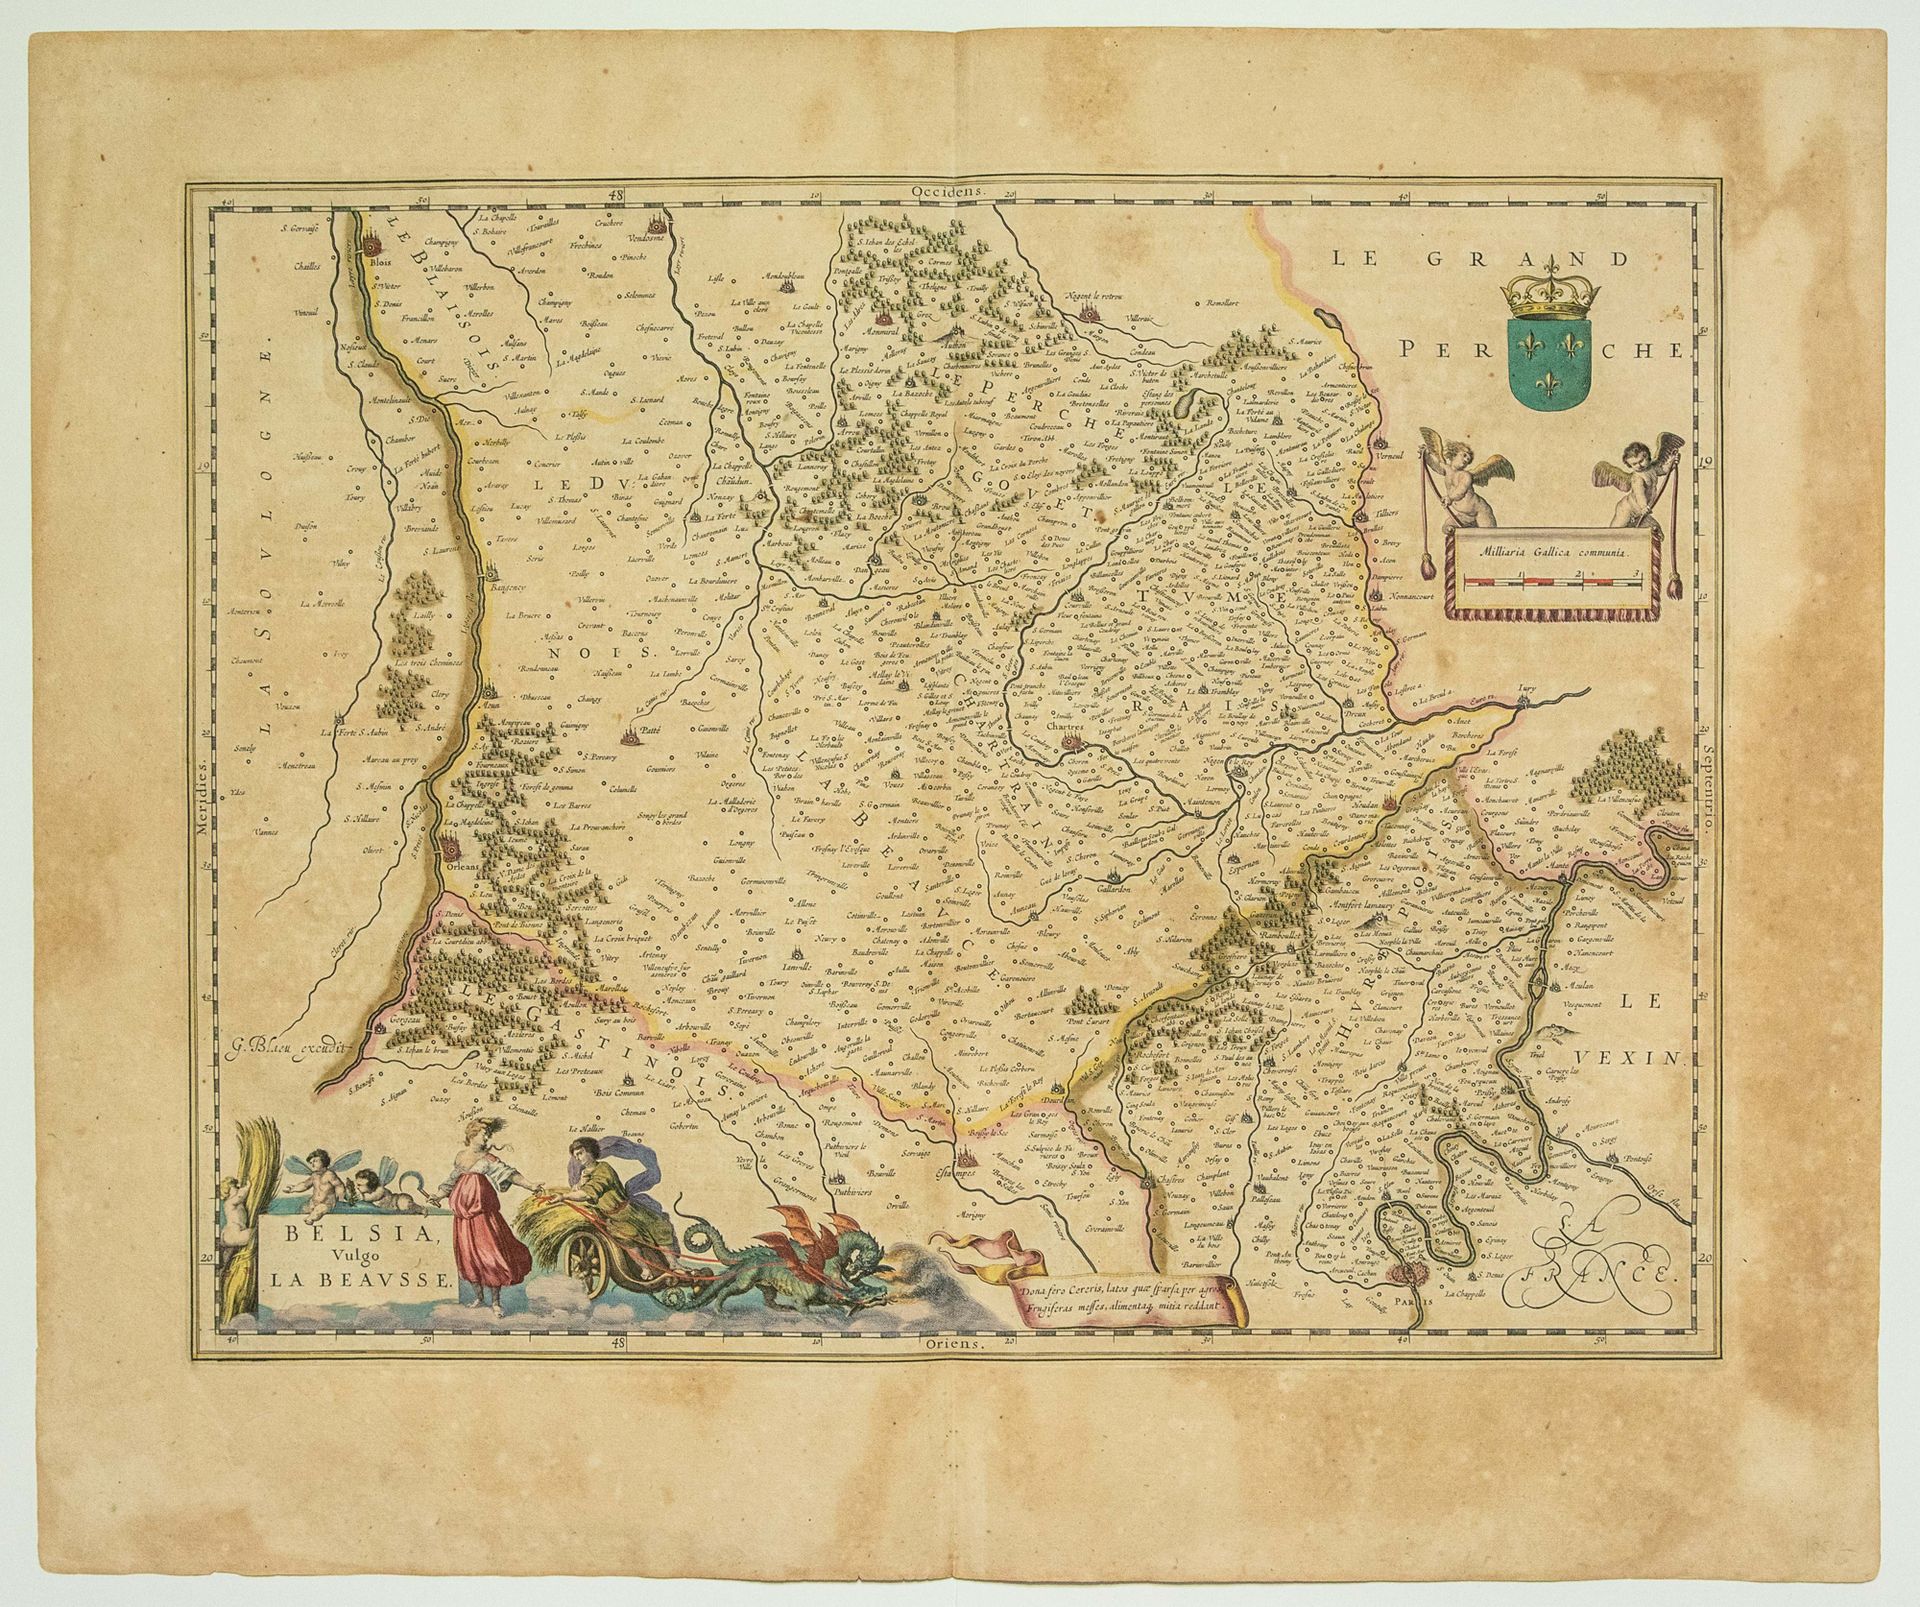 Null XVII MAPA de la BEAUCE: "BELSIA, vulgo la Beausse. (c. 1680) (50,5 x 60 cm)&hellip;